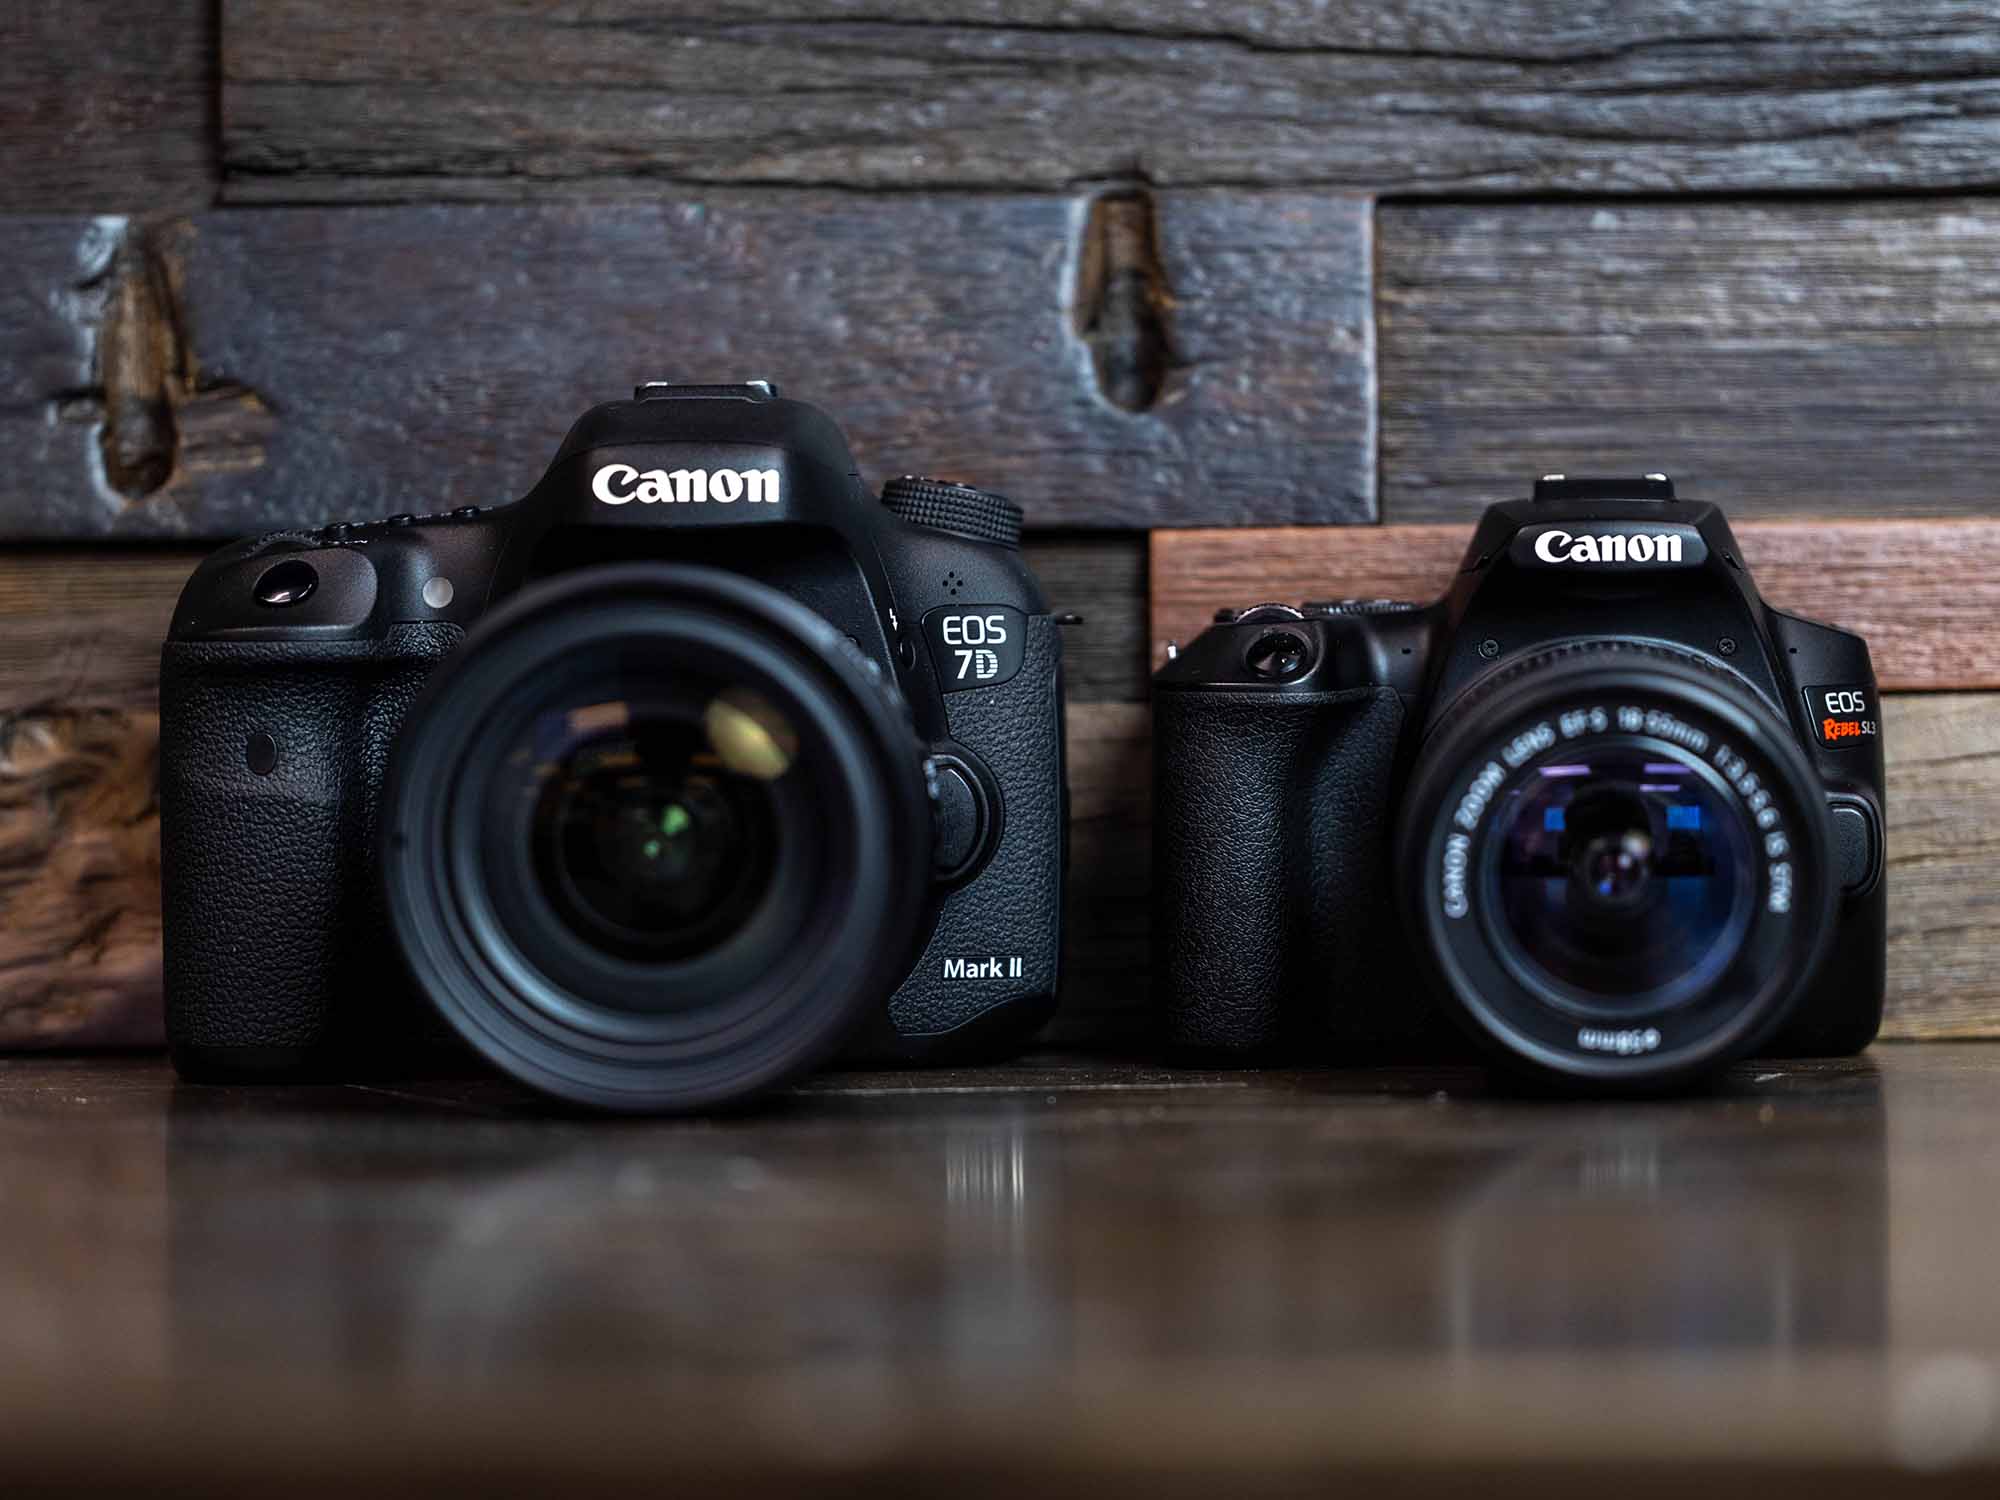 Canon EOS 250D Rebel SL3 review - IN DEPTH! 